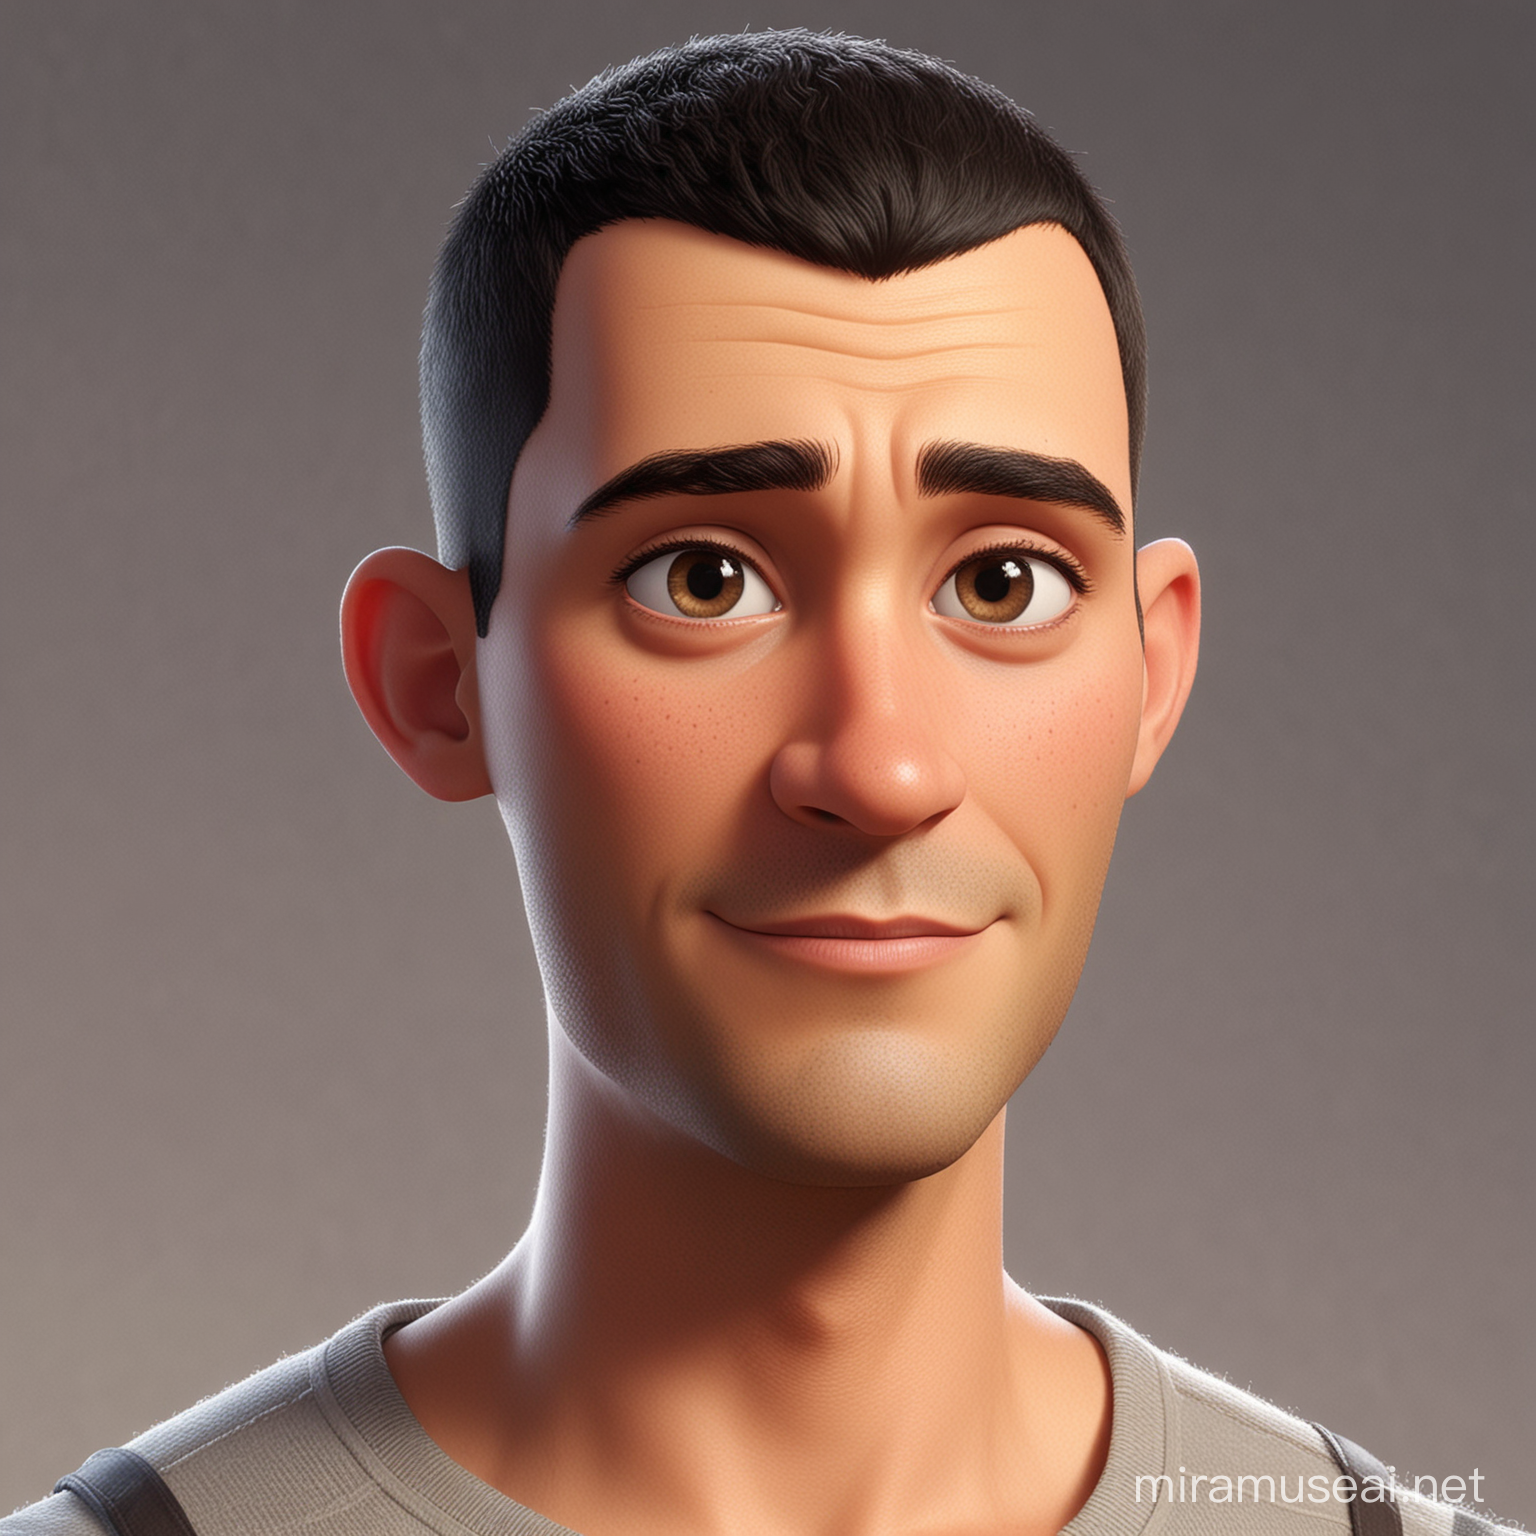 40YearOld Man in PixarStyle Cartoon with Short Black Hair